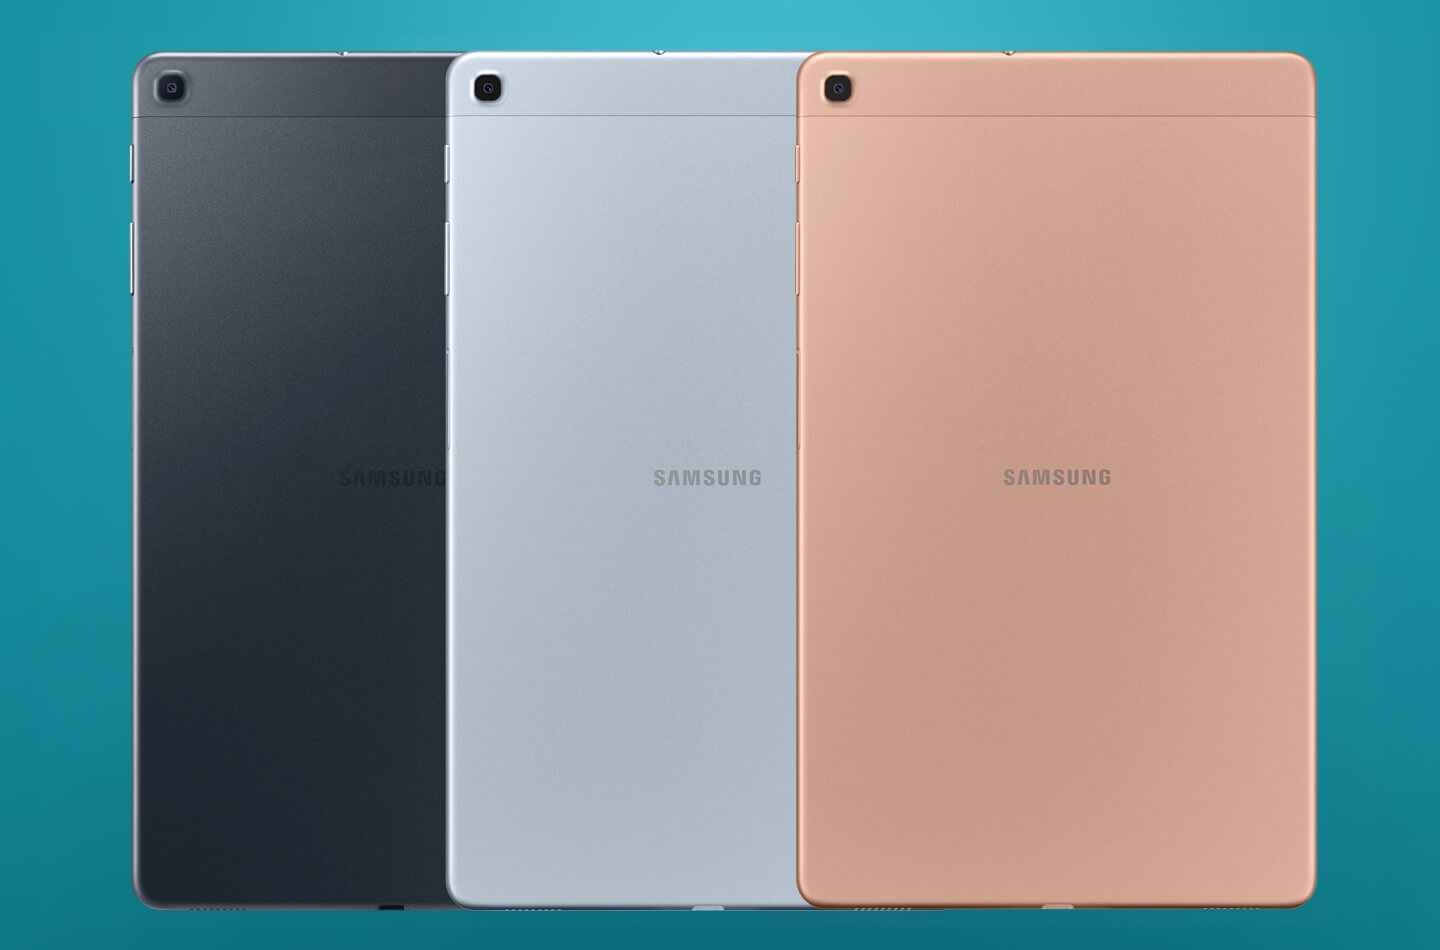 Met name chocola Memoriseren Samsung Galaxy Tab A 2019 is een goedkope tablet voor kids | LetsGoMobile